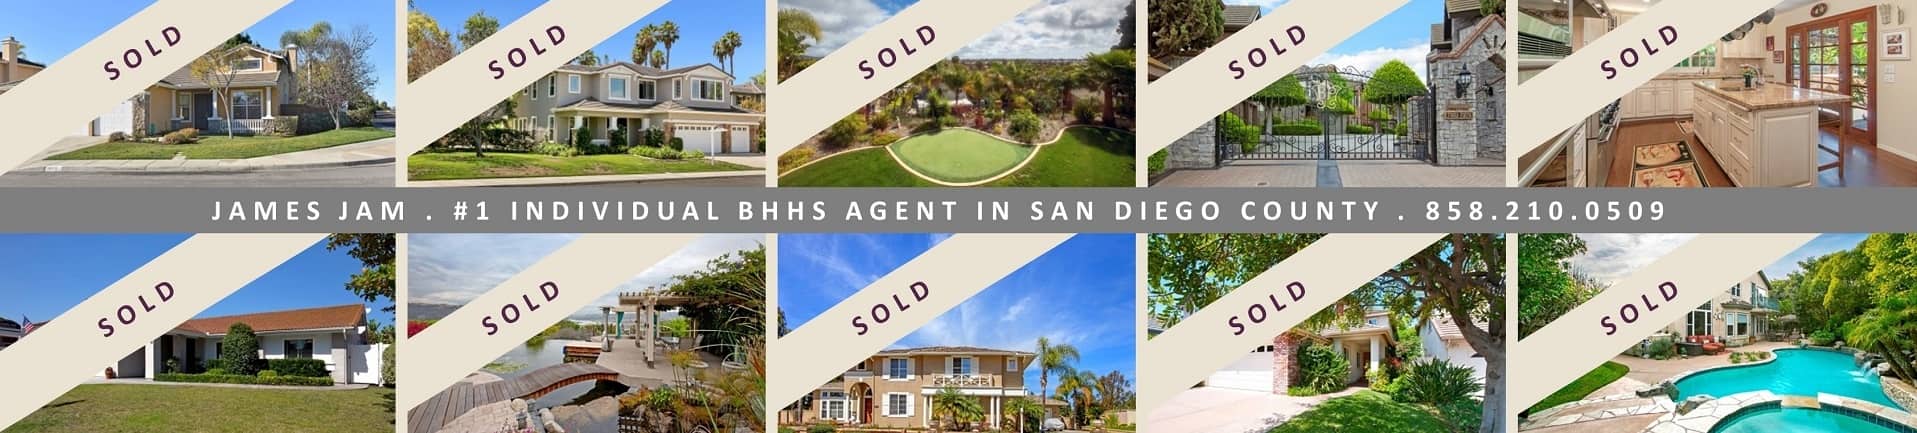 Carlsbad Real Estate – Carlsbad, CA Homes For Sale – Realtor James Jam